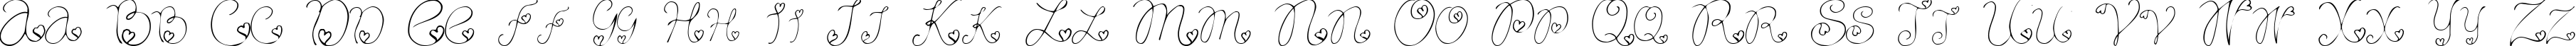 Пример написания английского алфавита шрифтом Craftopia Love